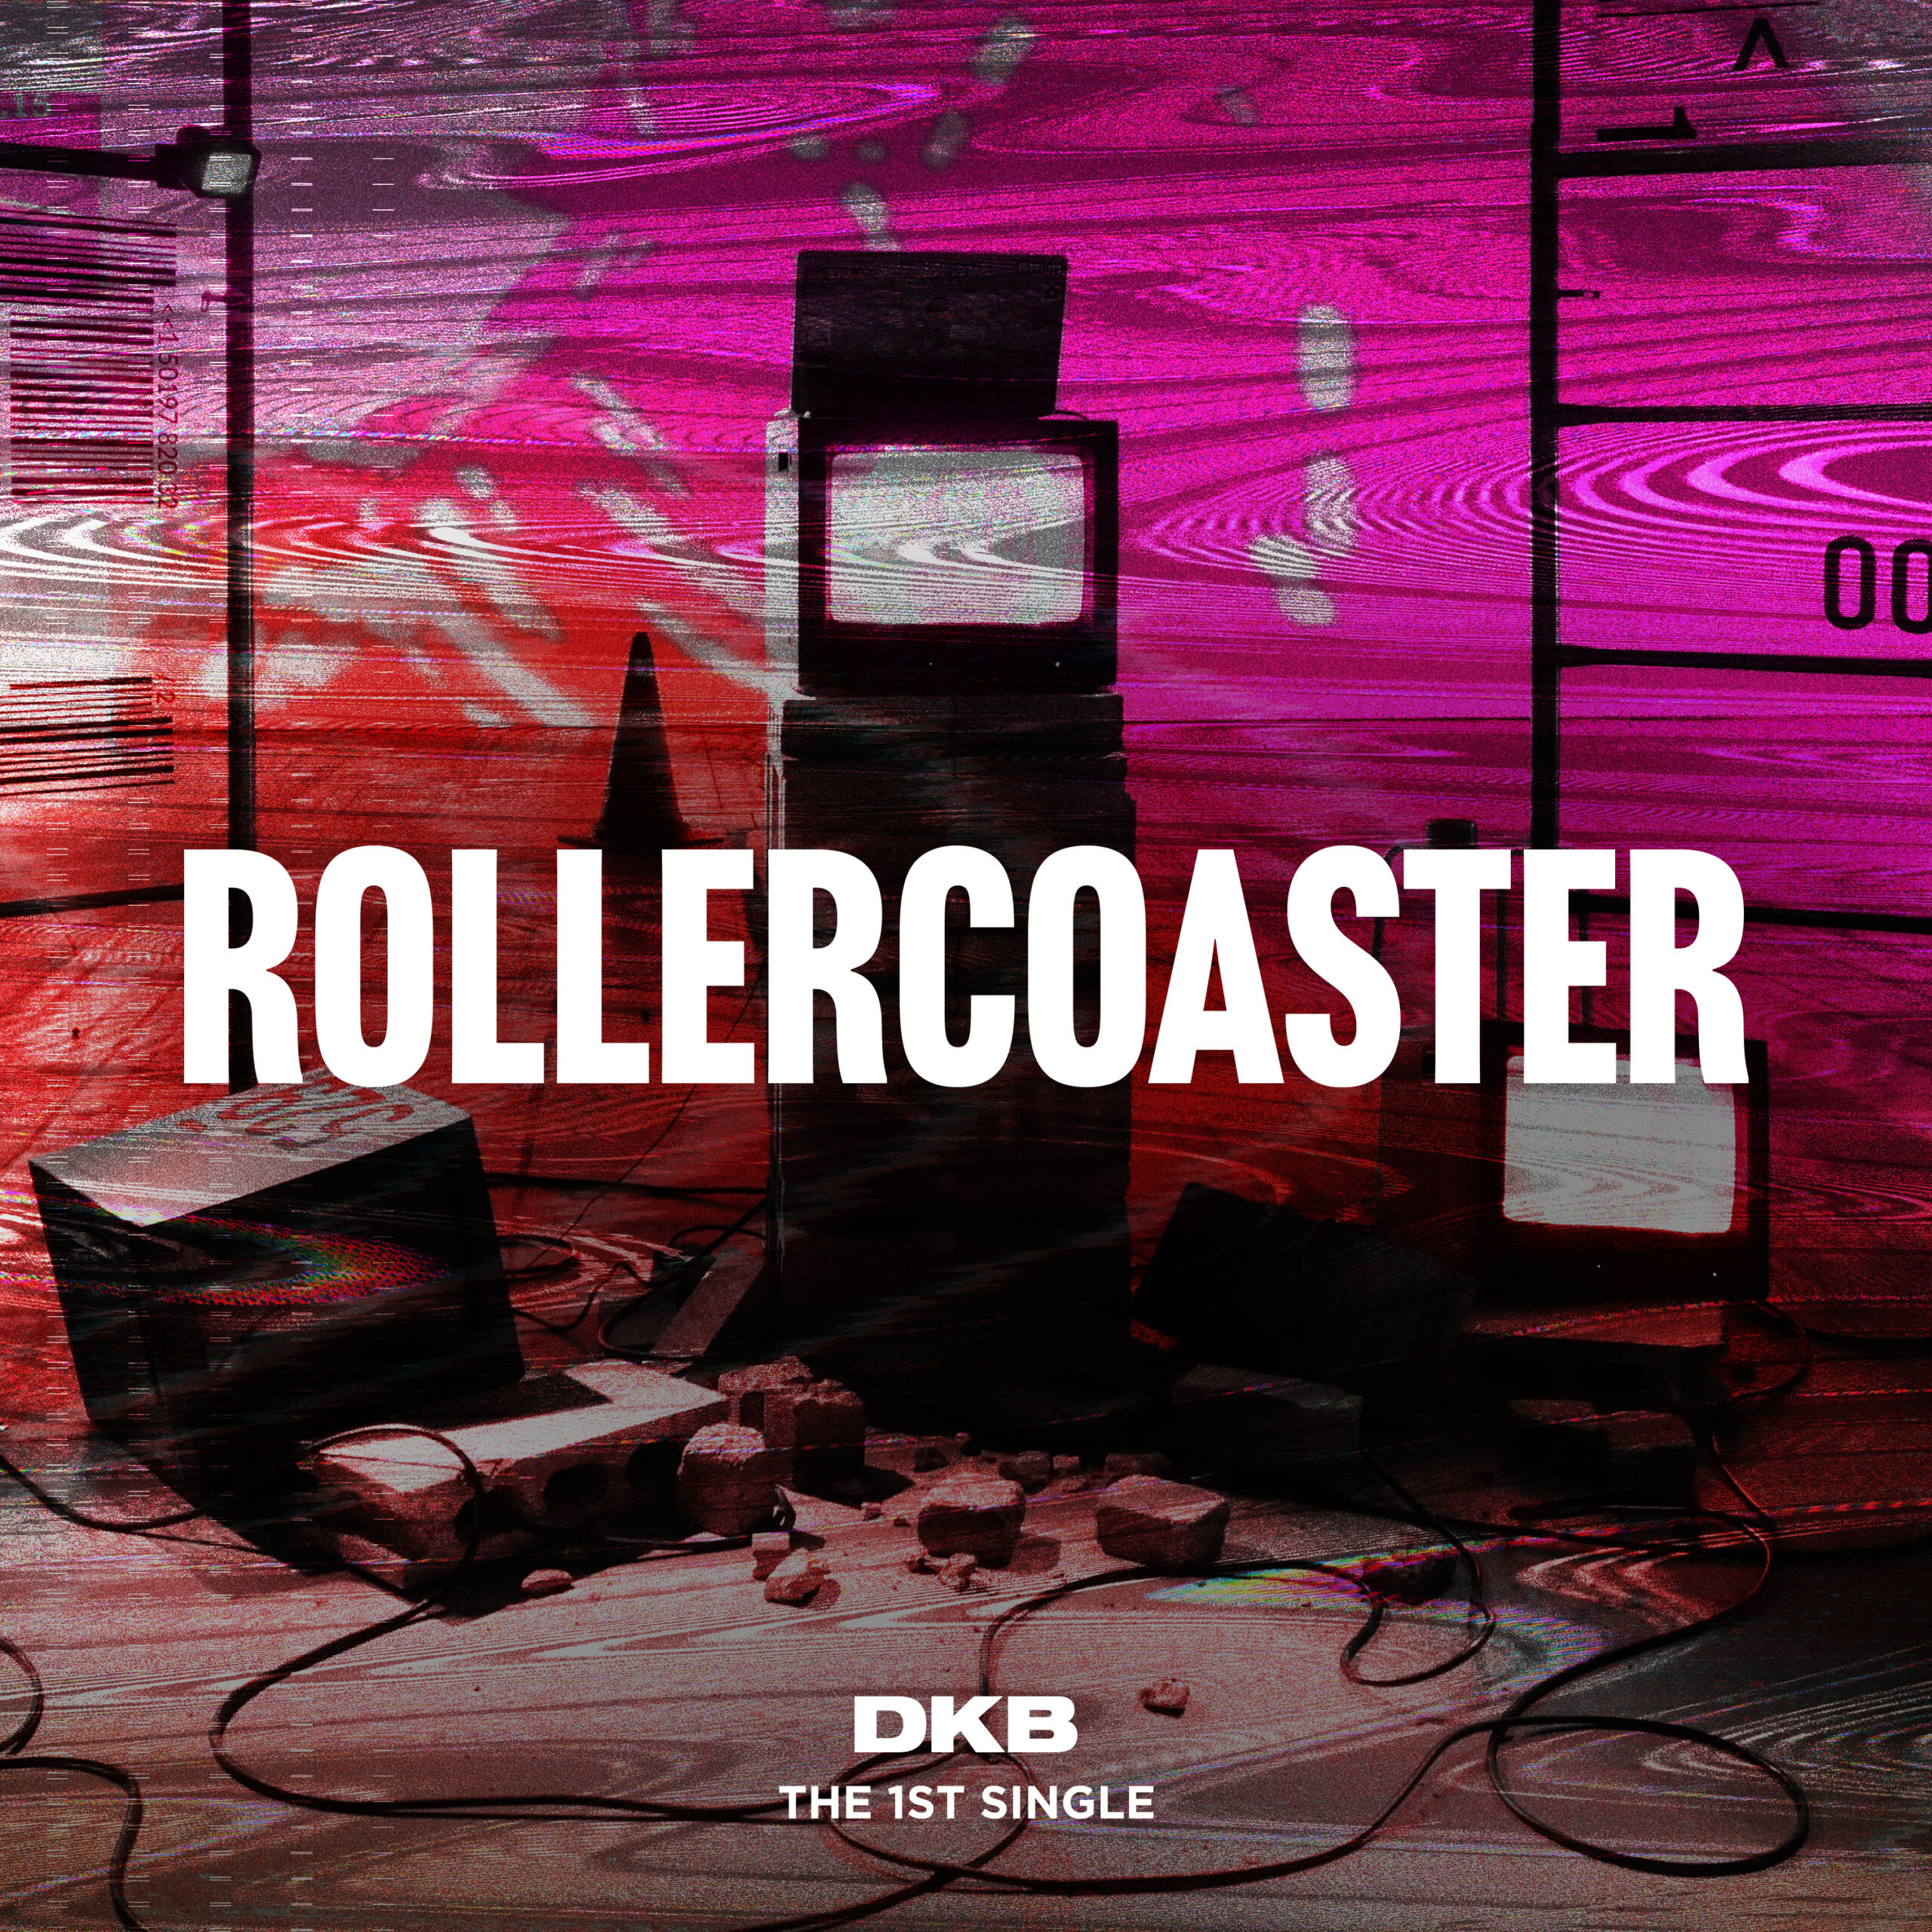 予約受付終了【FC限定特典付き】DKB 1ST SINGLE ALBUM『Rollercoaster 